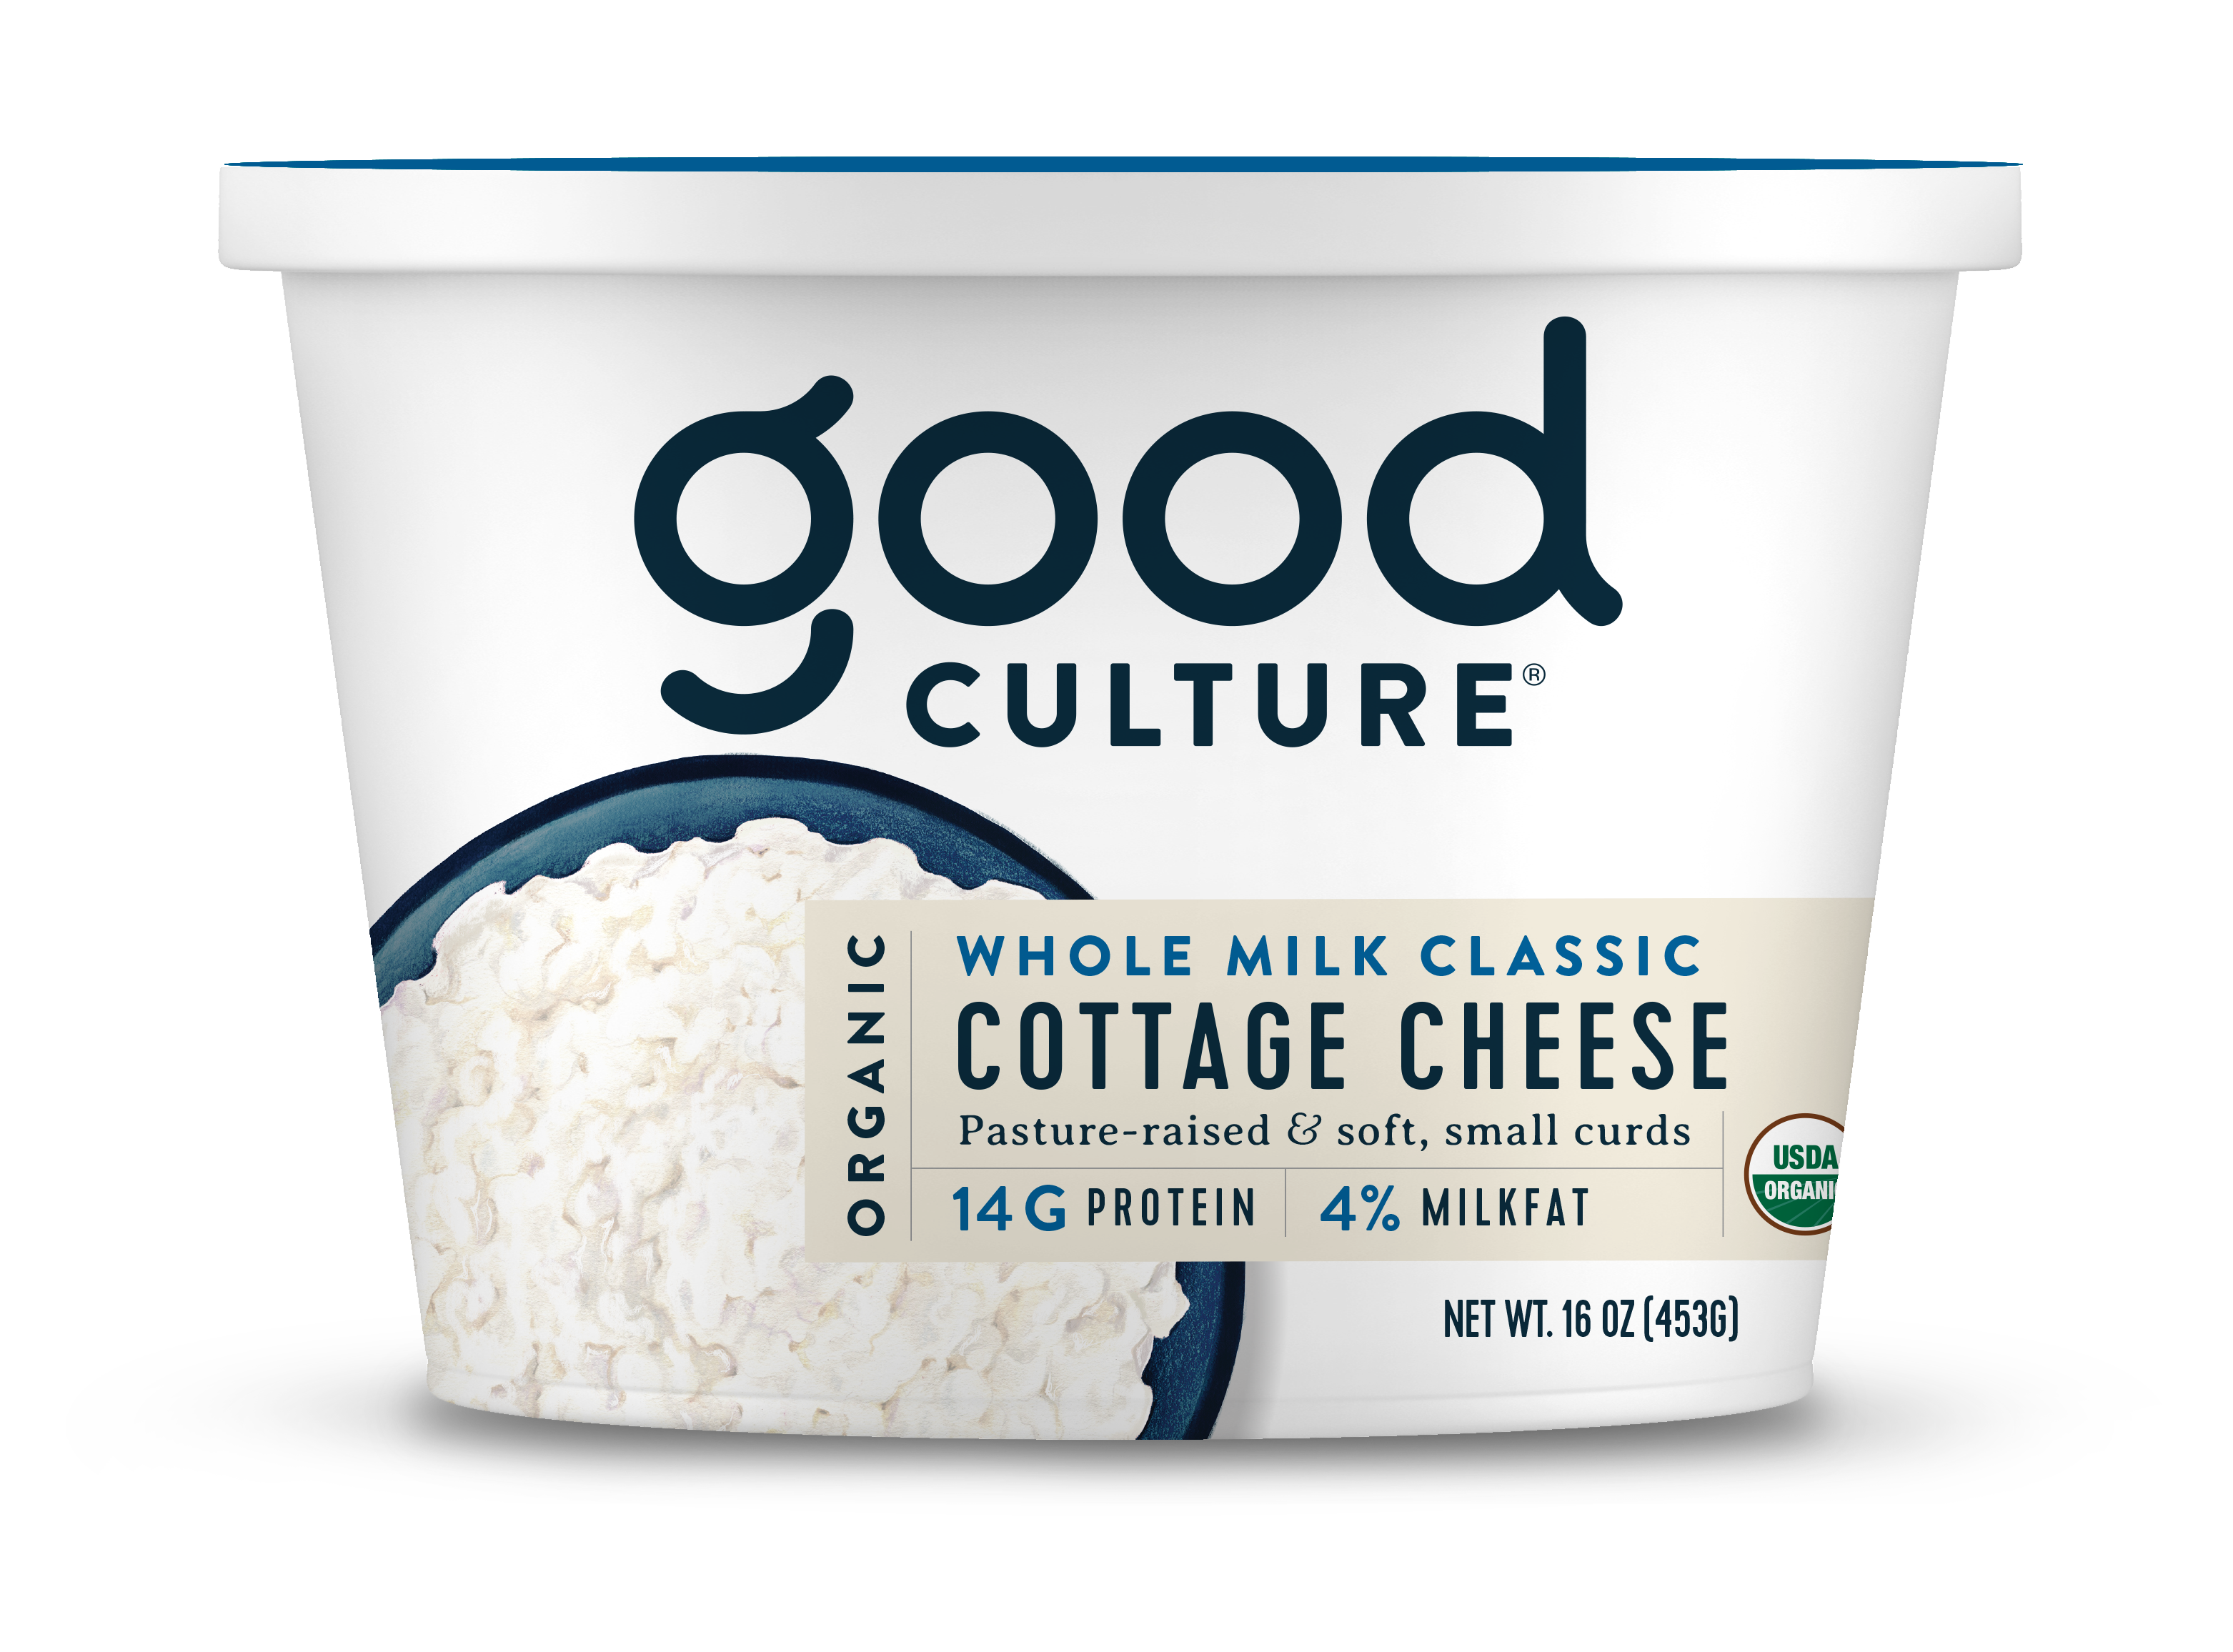 Good Culture Organic Whole Milk Classic Cottage Cheese 6 units per case 16.0 oz